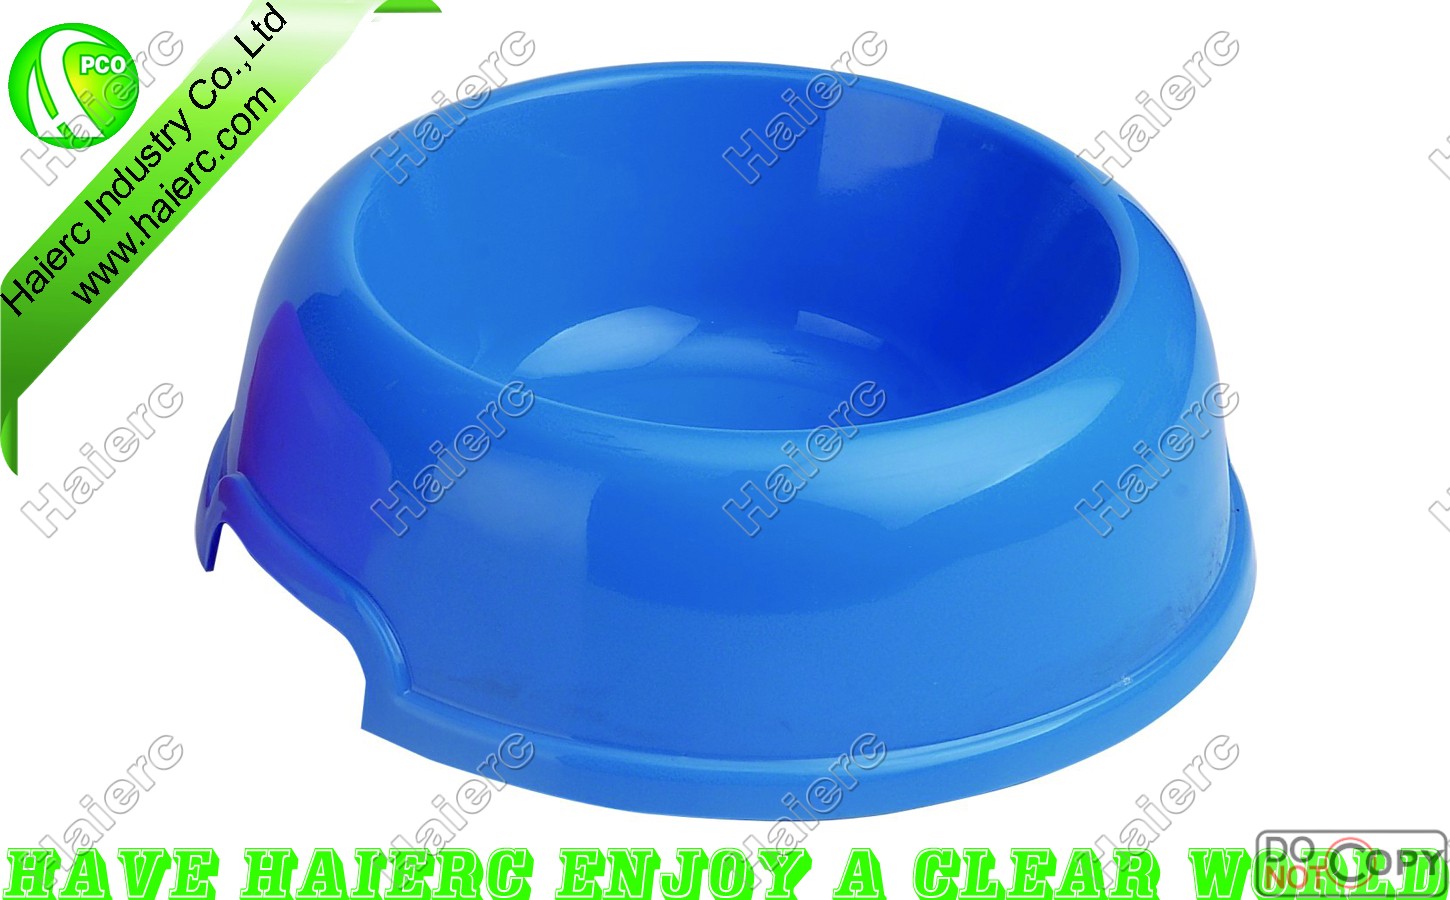 >Medium-sized bowl P900: